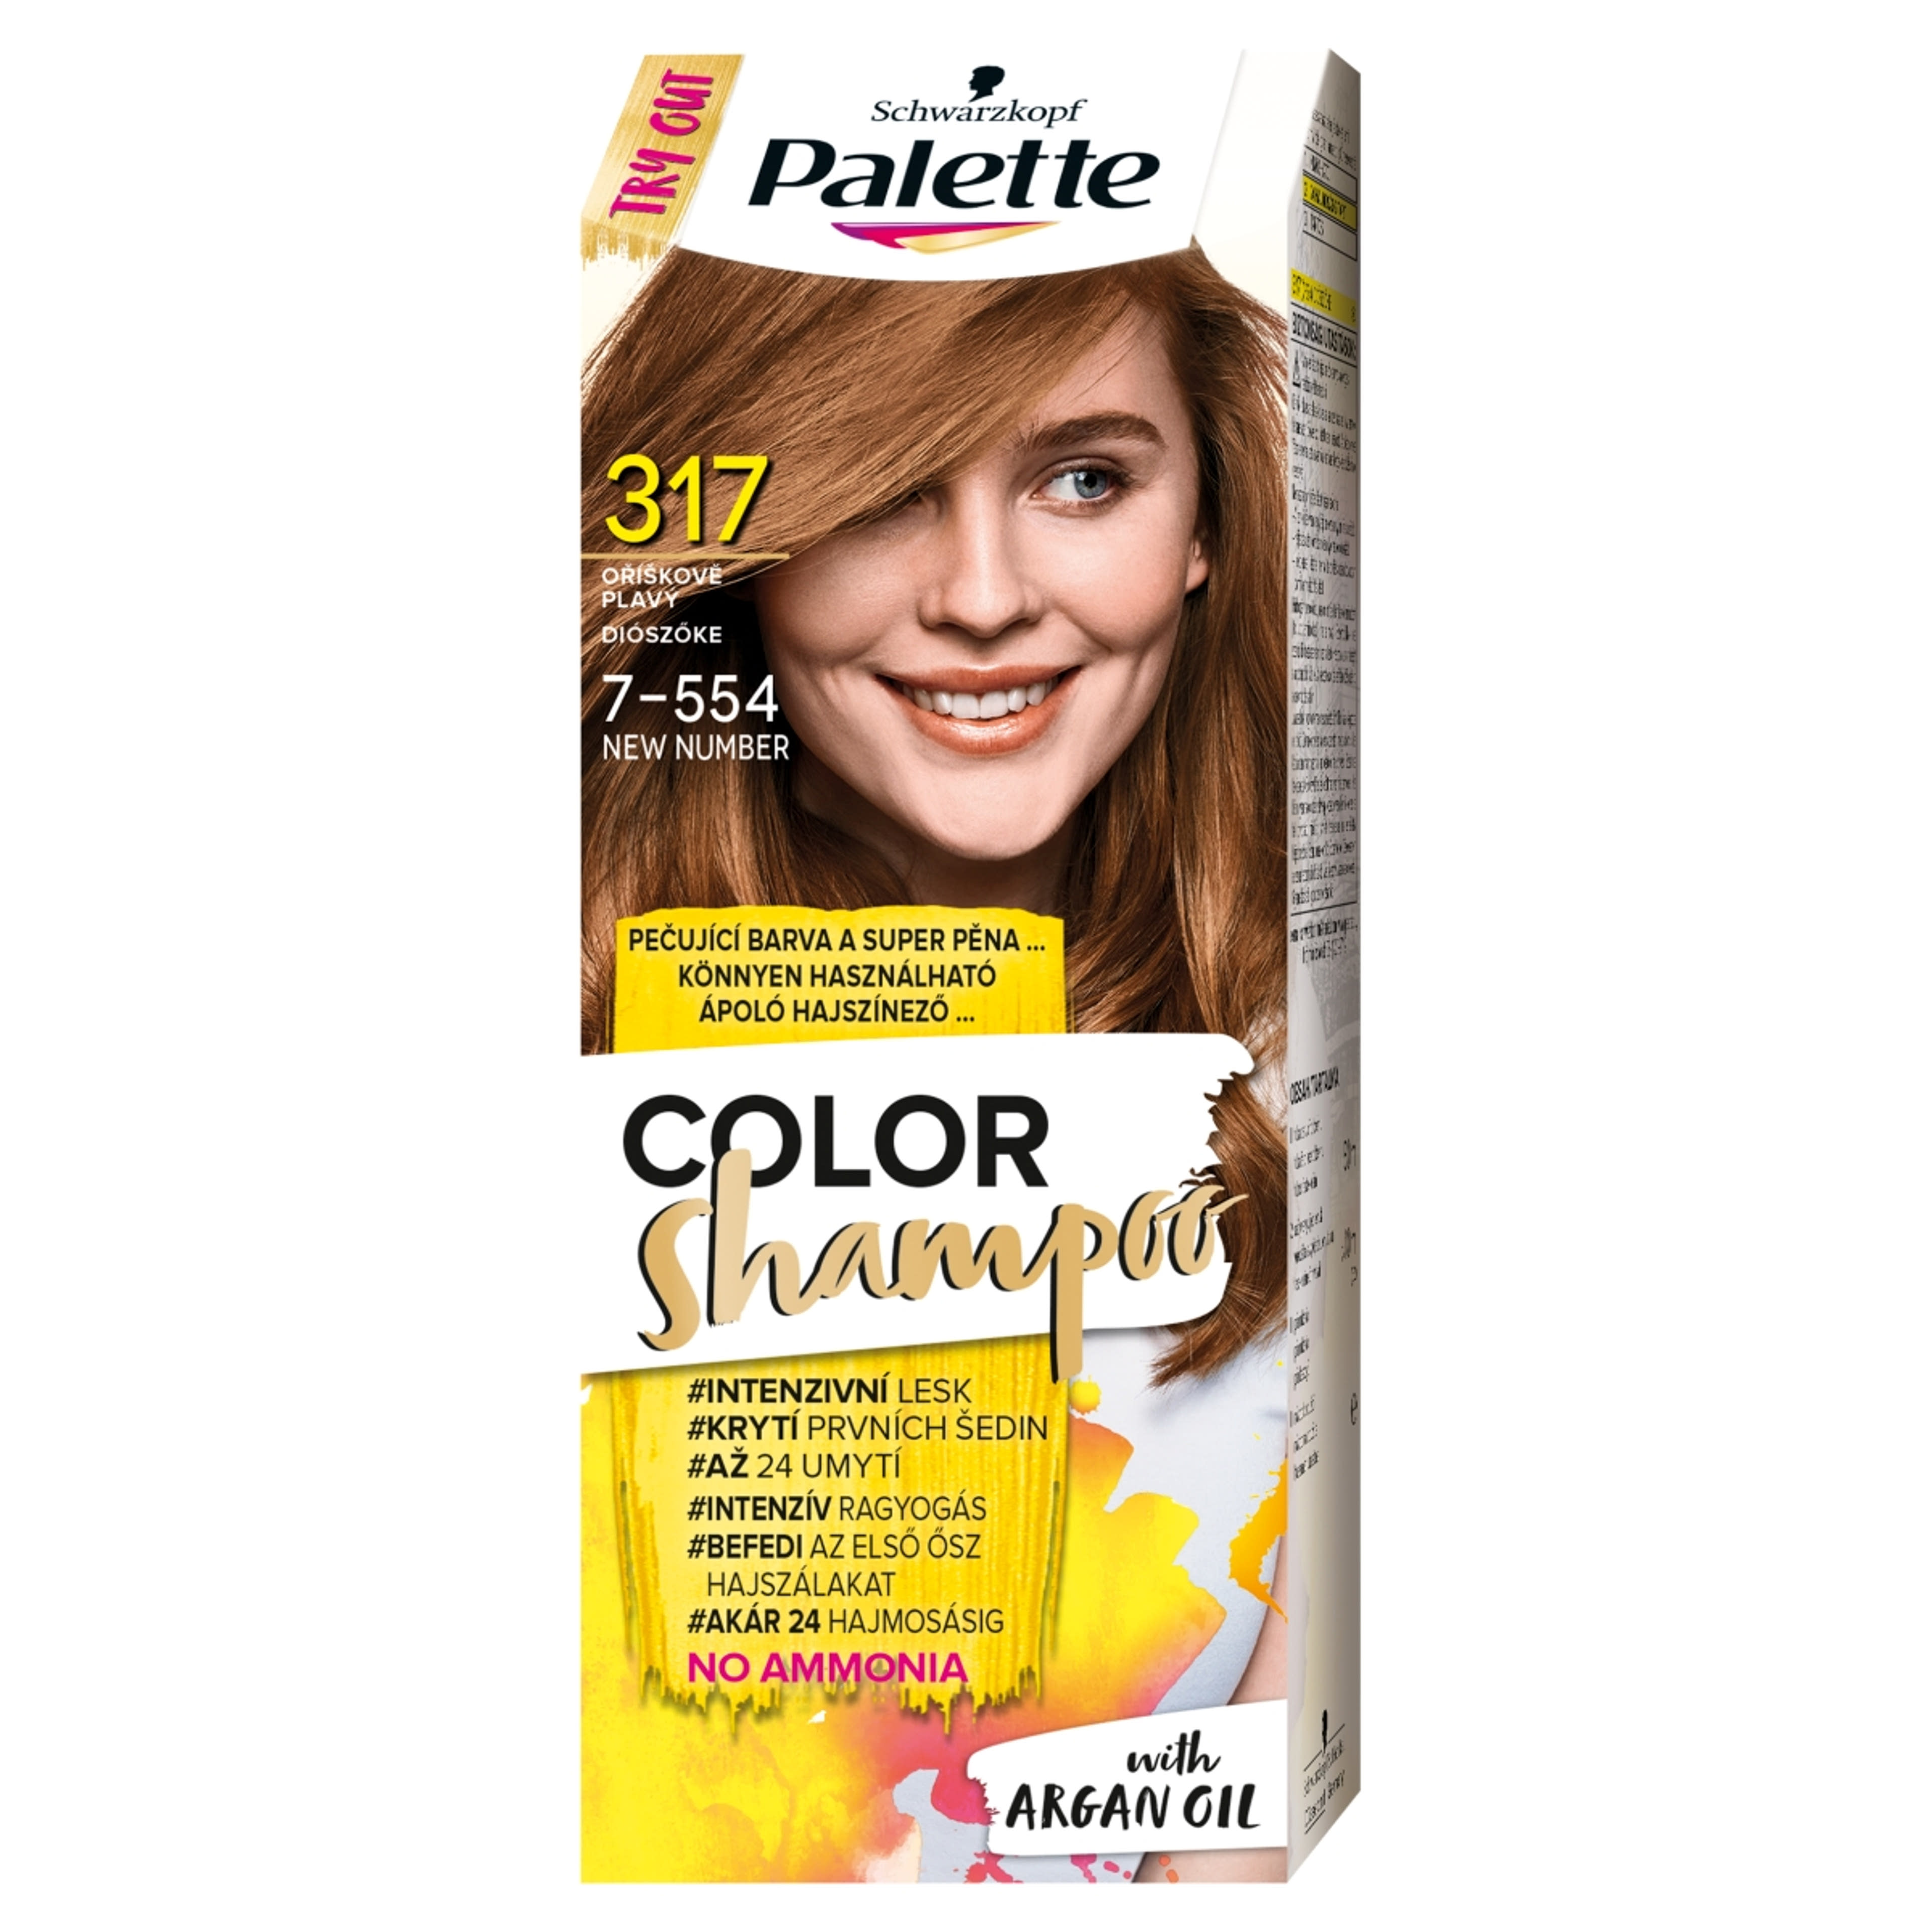 Schwarzkopf Palette Color Shampoo hajfesték 317 diószőke - 1 db-1